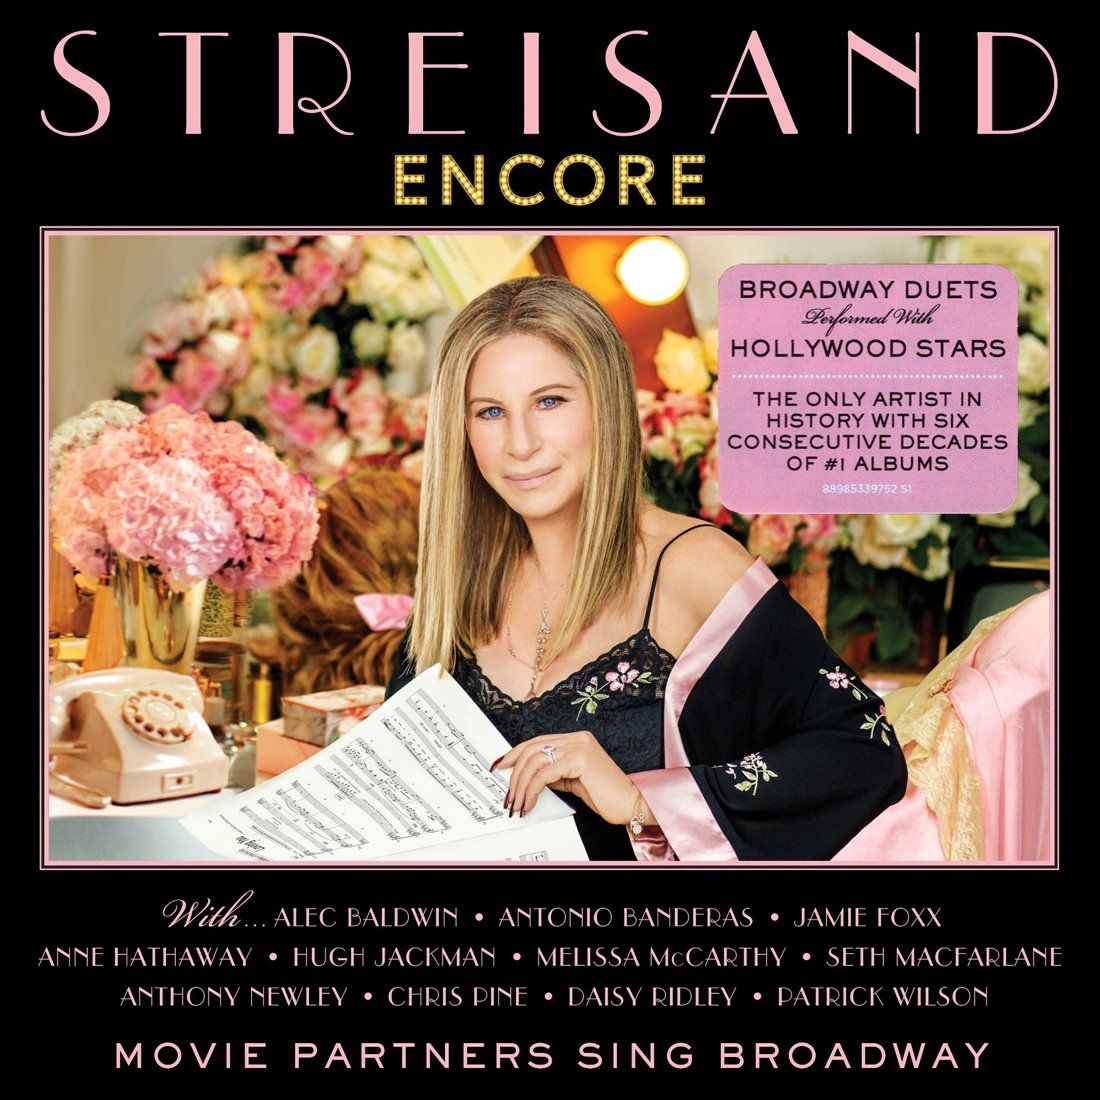 Encore CD cover